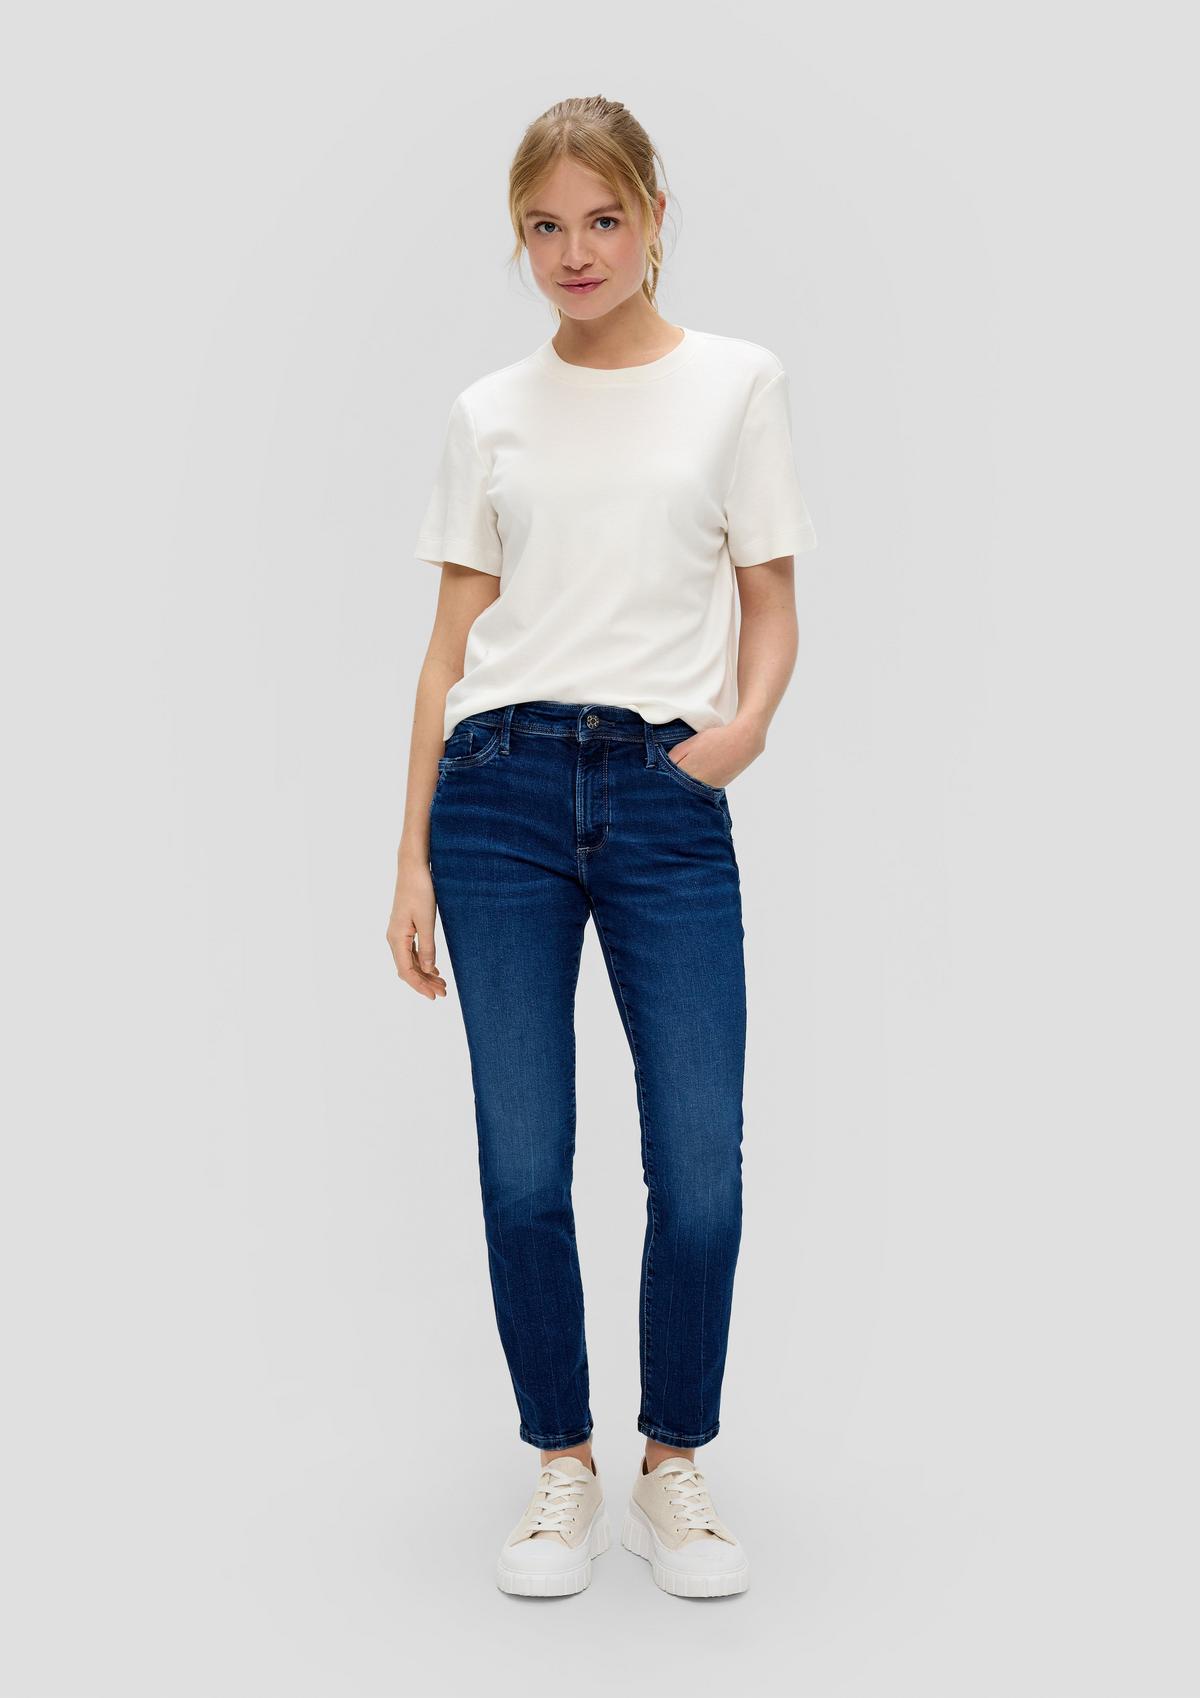 360° denim / jeans Betsy / slim fit / mid rise / slim leg